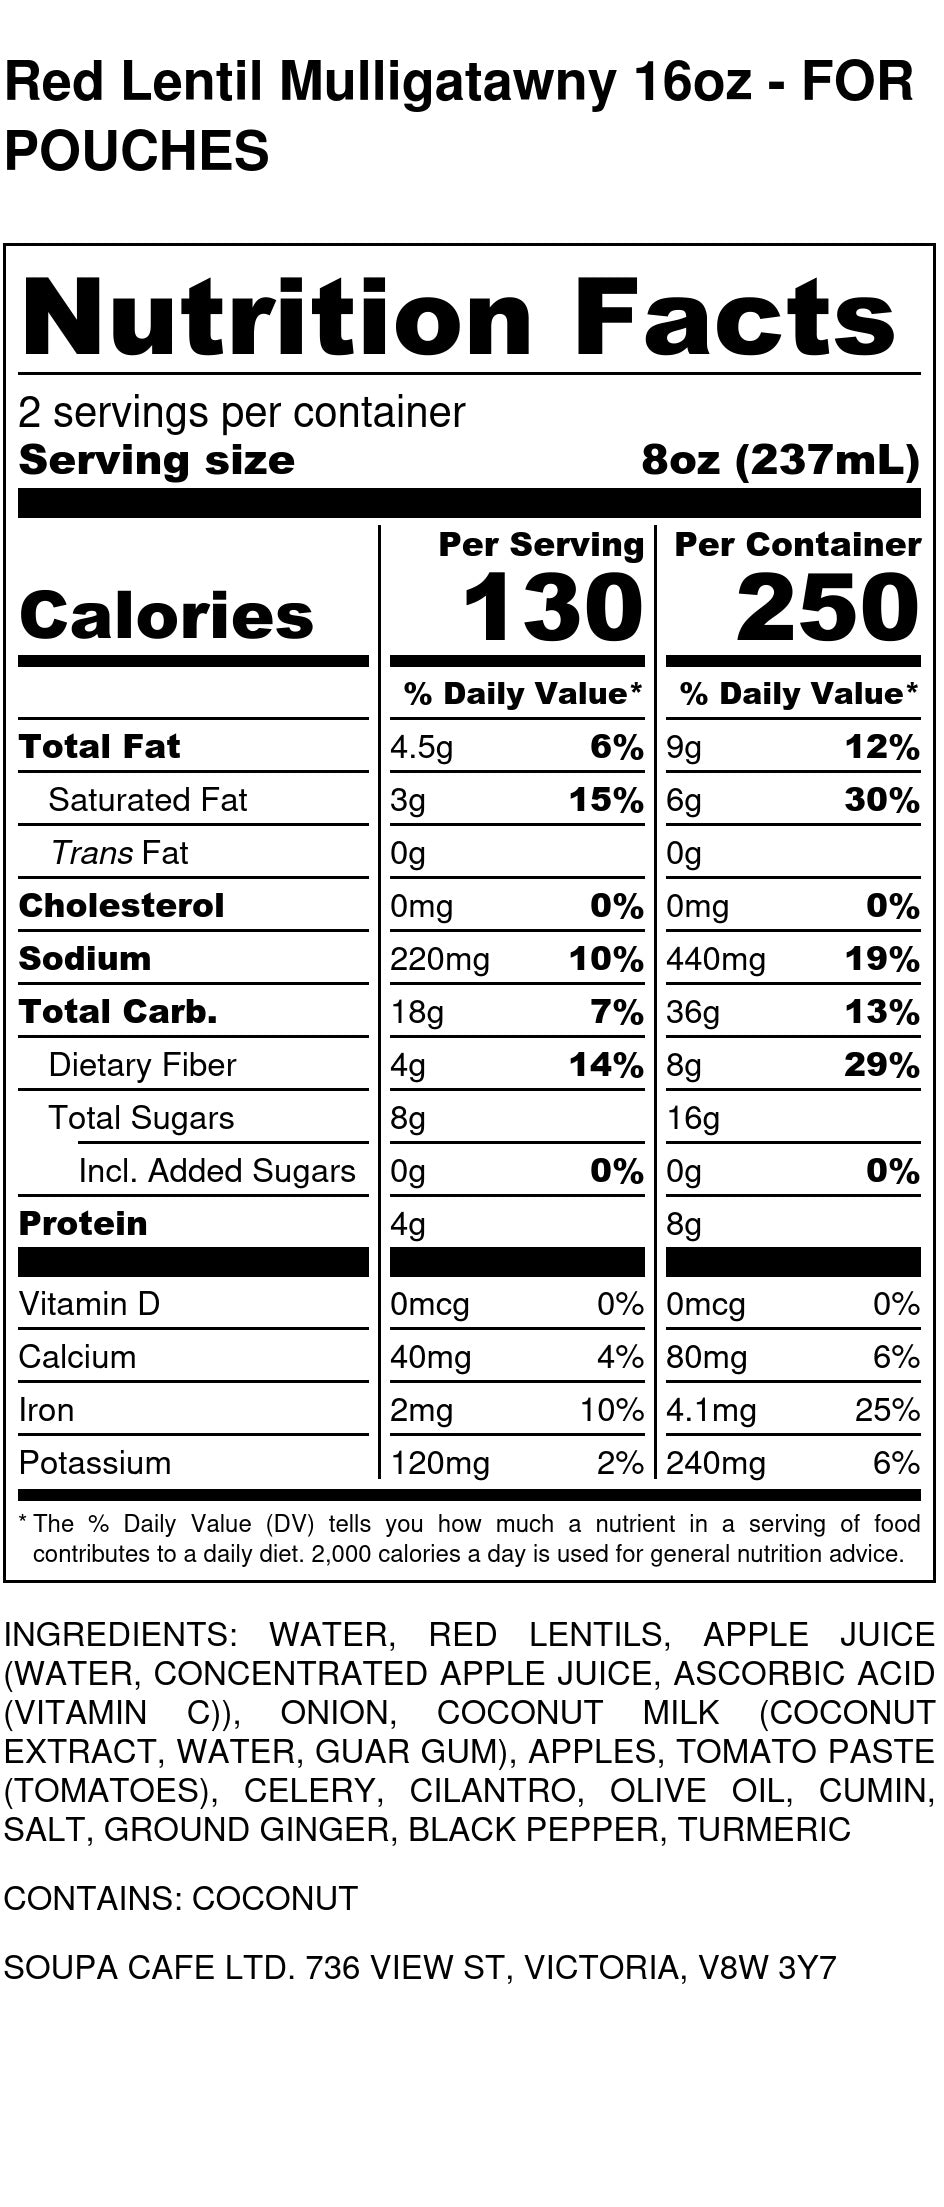 Red Lentil Mulligatawny - Soupa Cafe Nutritional Facts Table